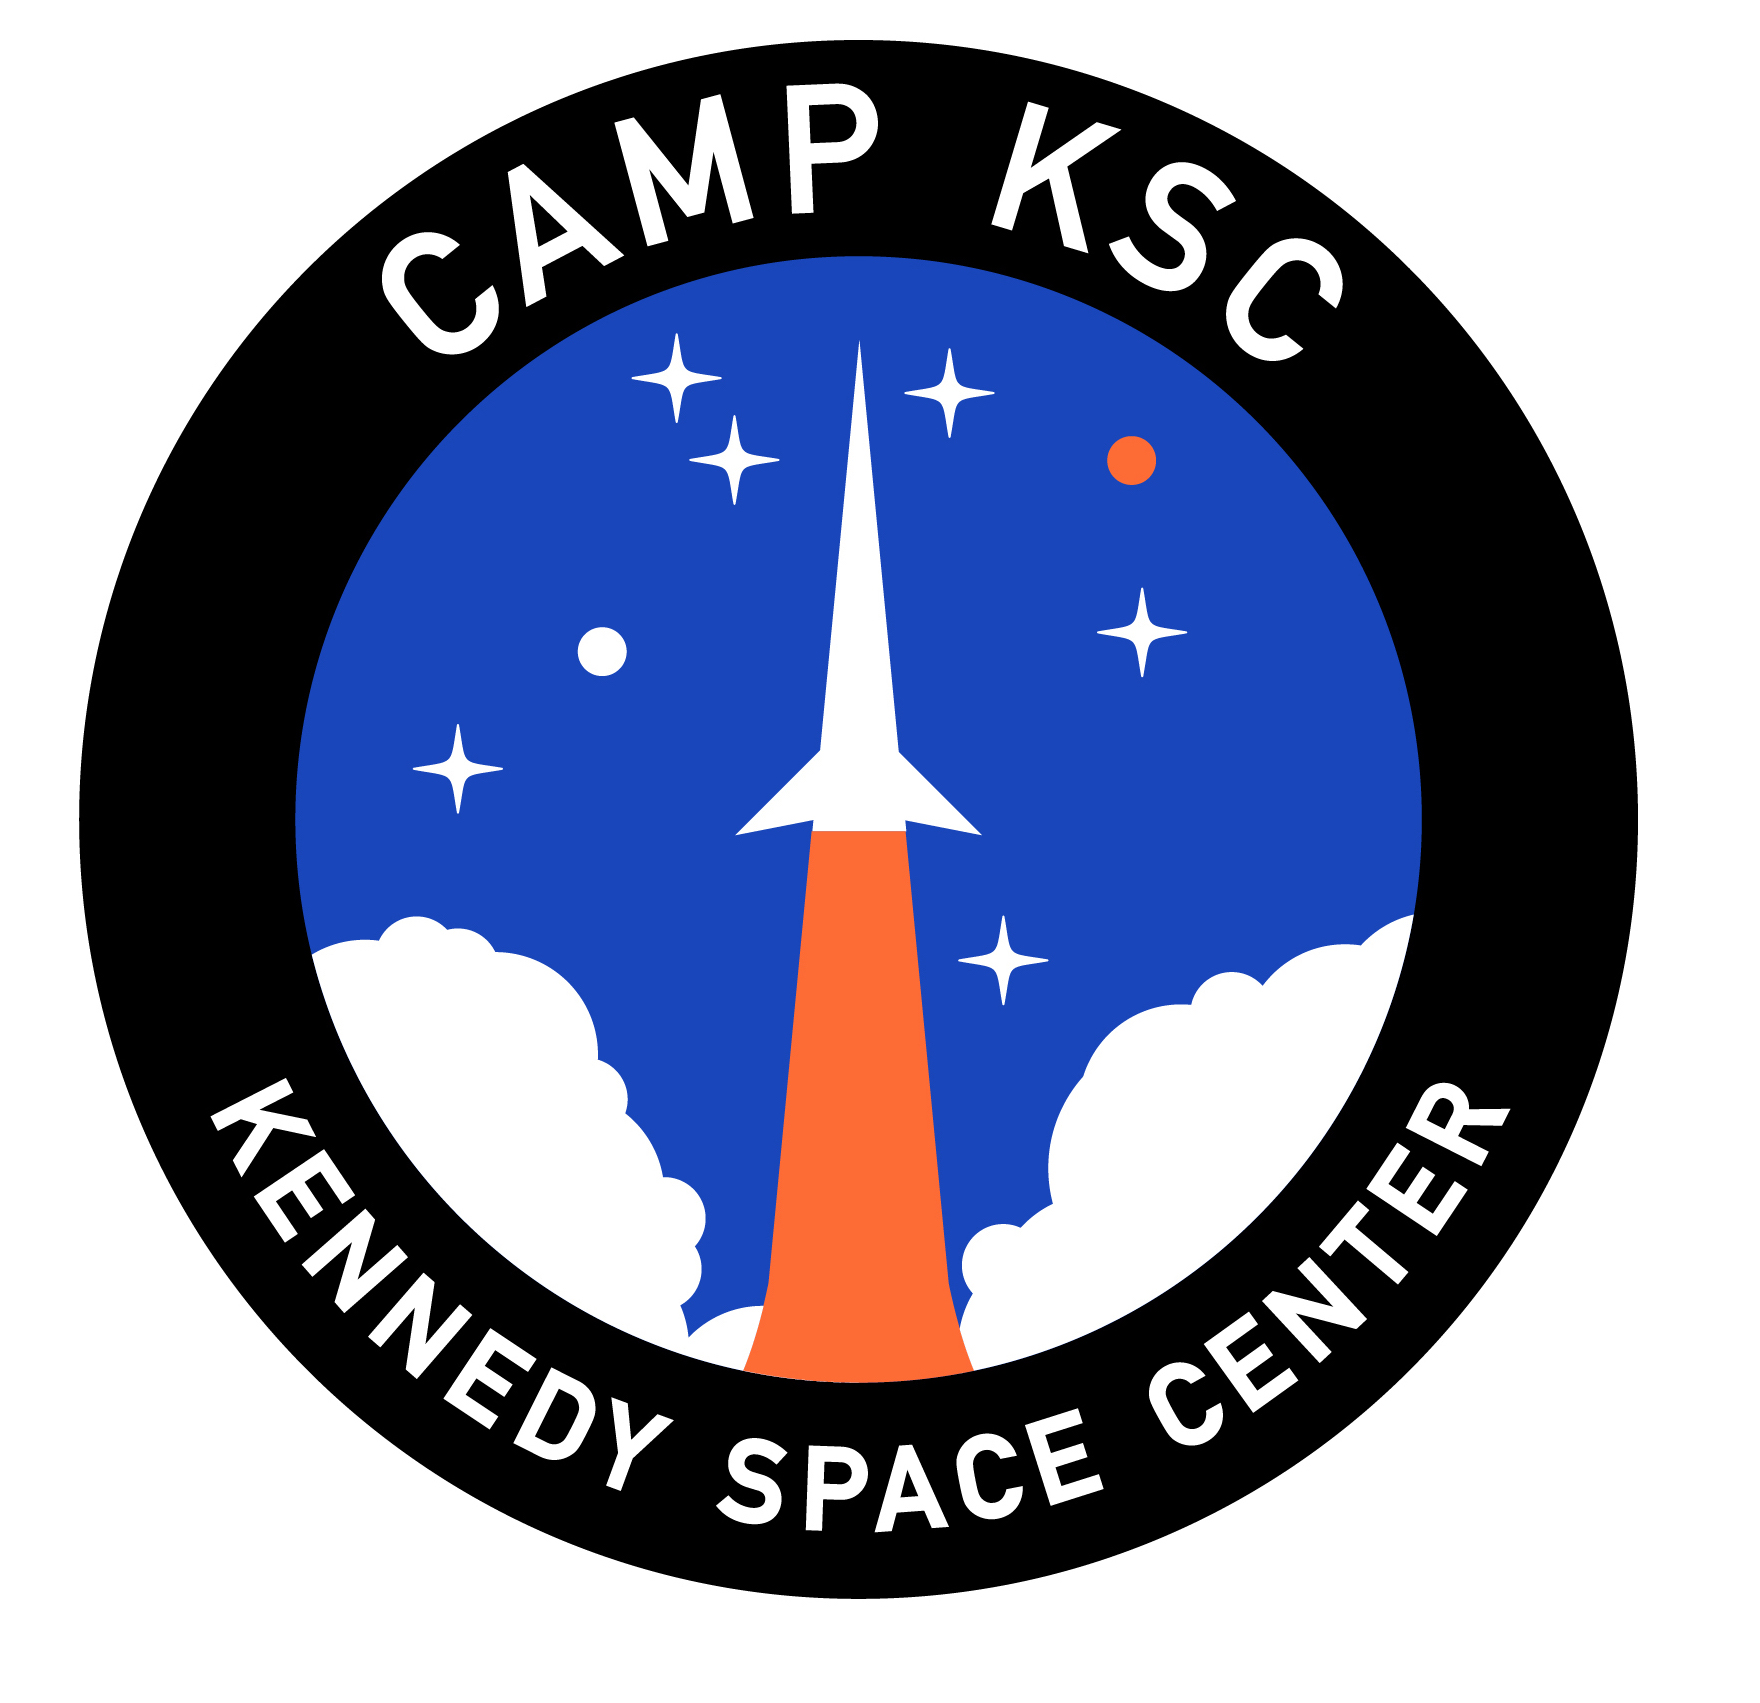 Camp KSC Logo